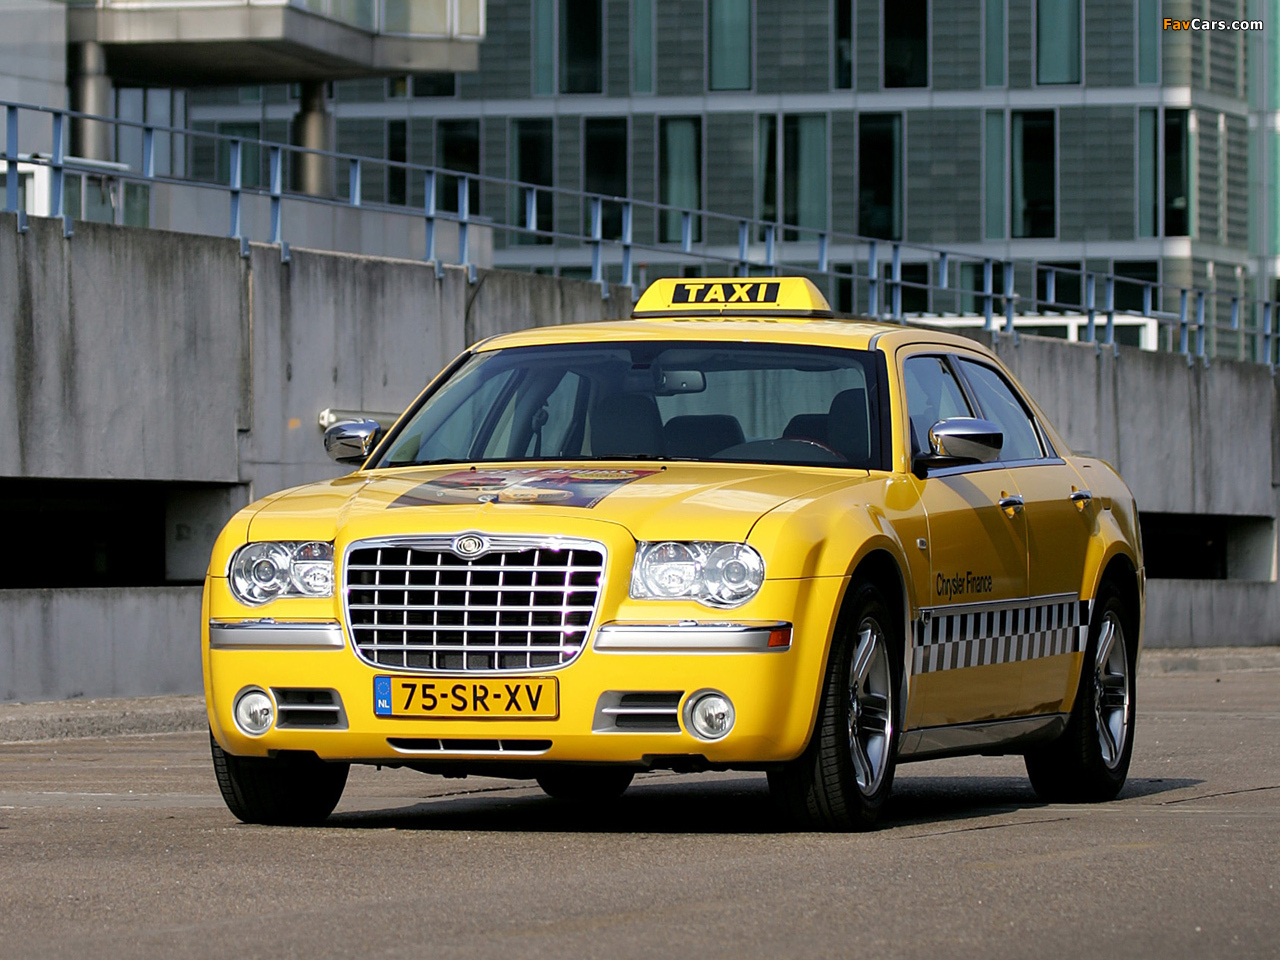 Иви такси. Chrysler 300c Taxi. Chrysler 300 Taxi. Крайслер 300 с такси. Chrysler 300 NYC Taxi.